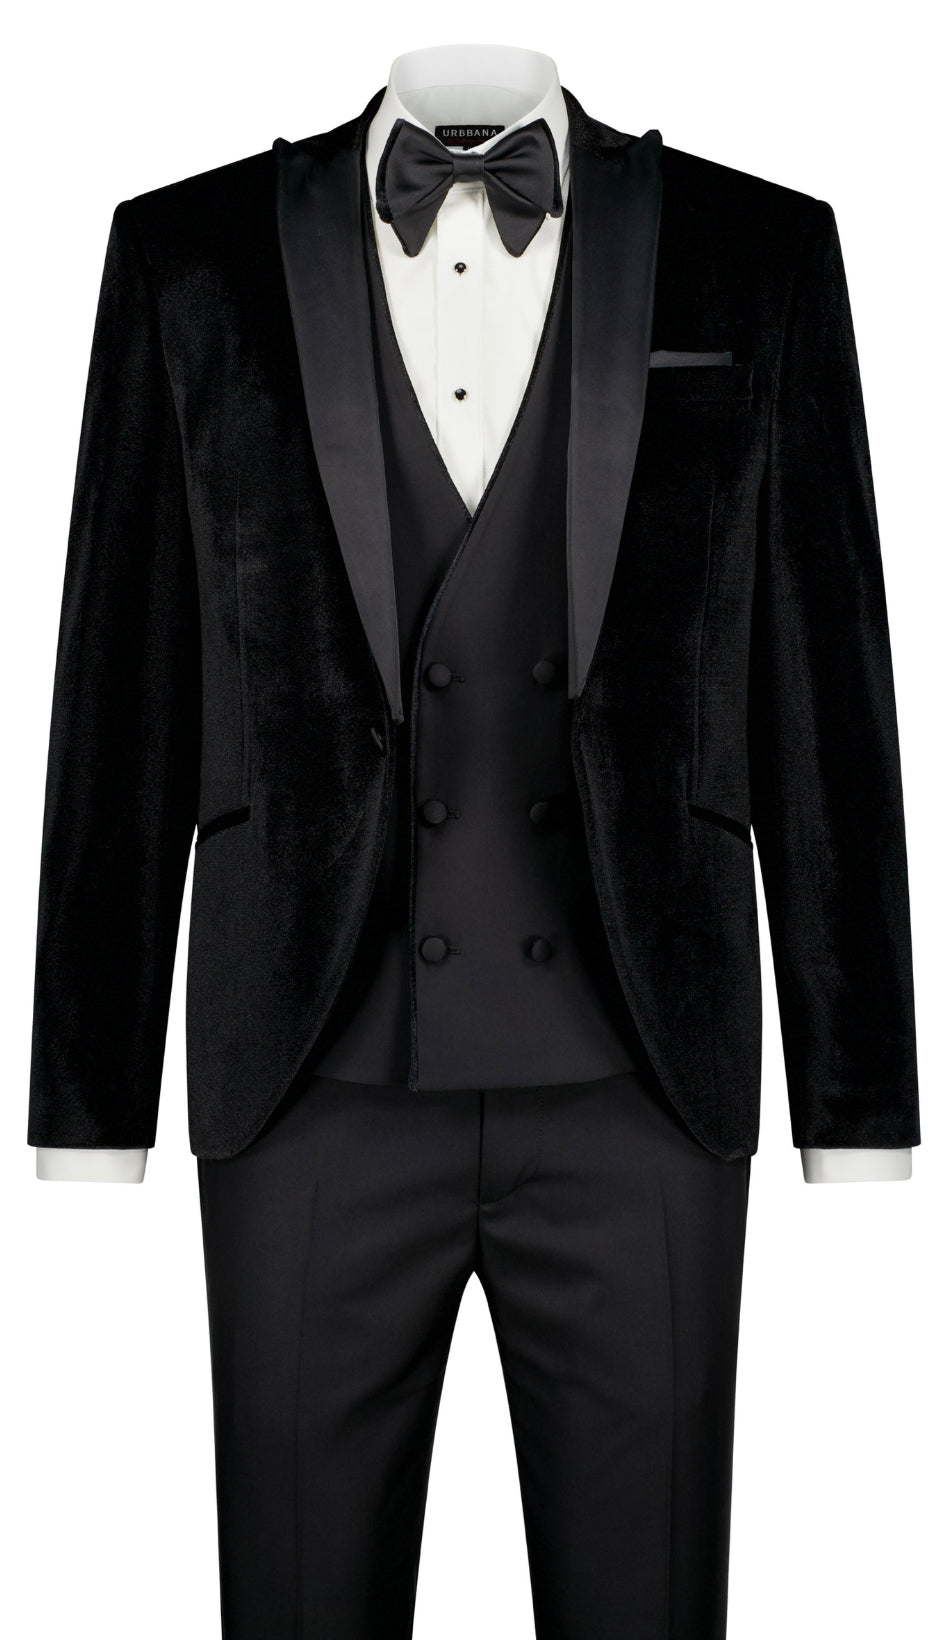 The Barrack Velvet Ceremony Suit - Suit by Urbbana